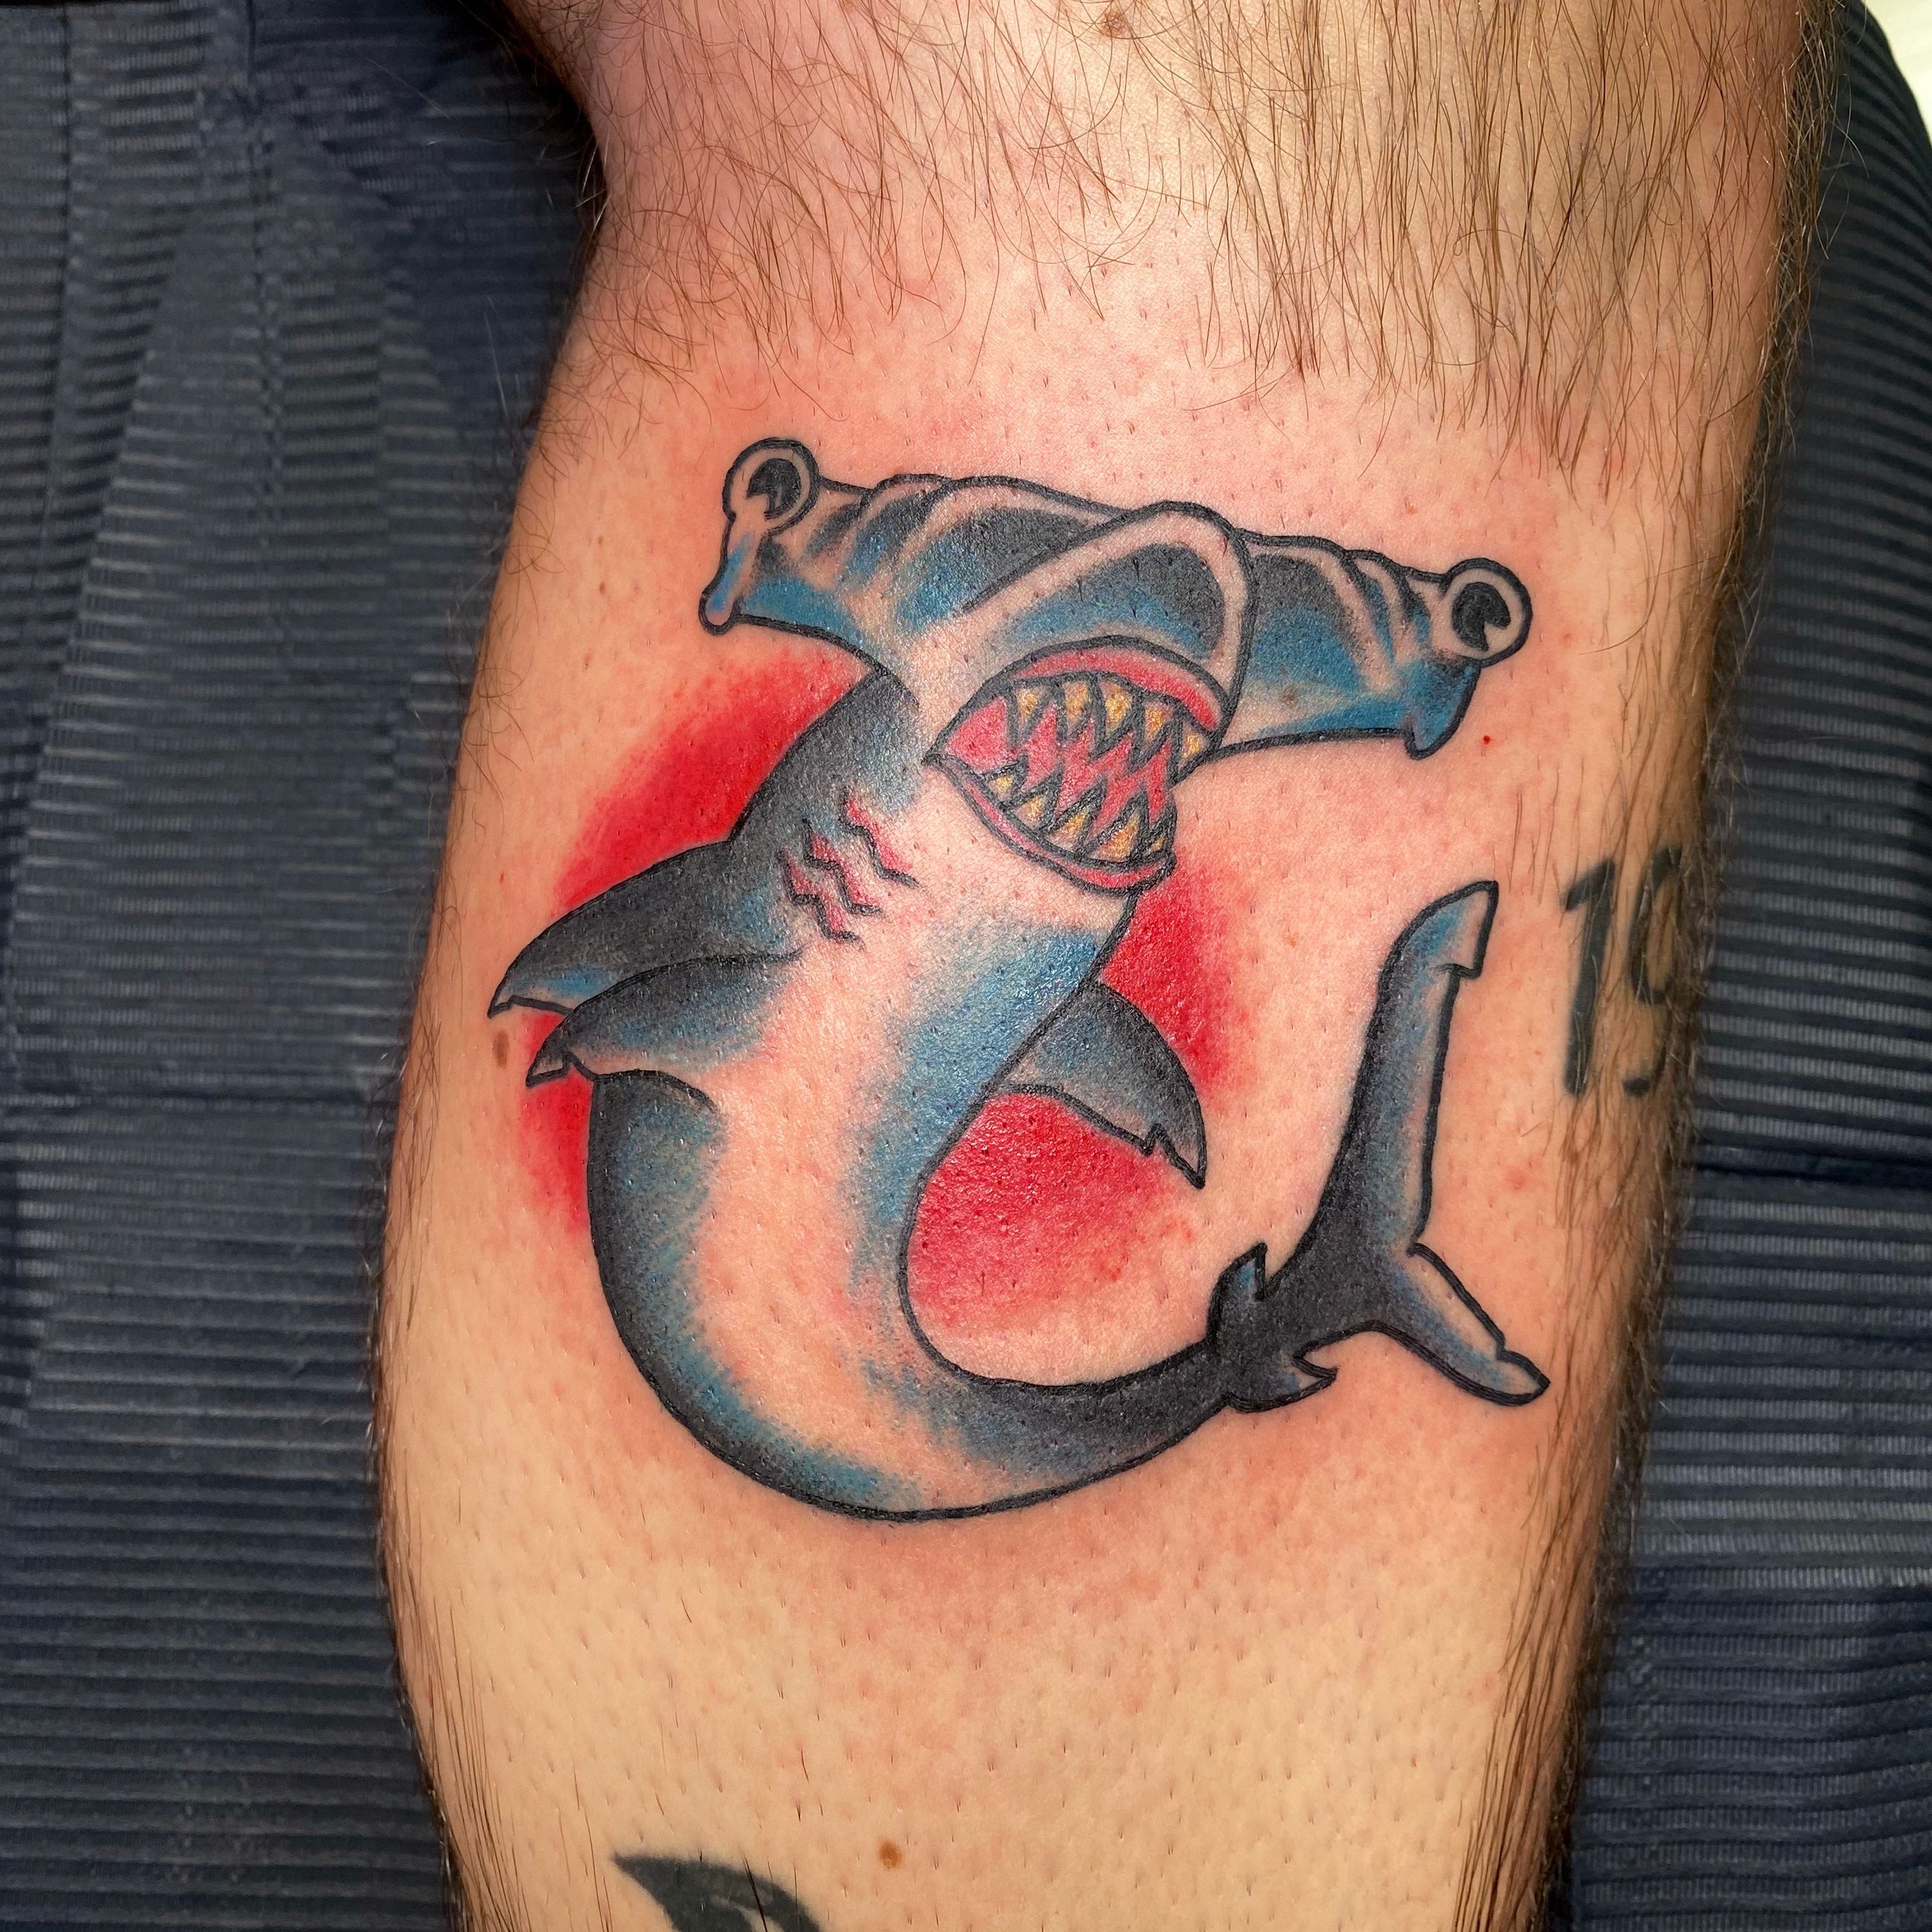 Hammerhead Shark Tattoo - Unique and Striking